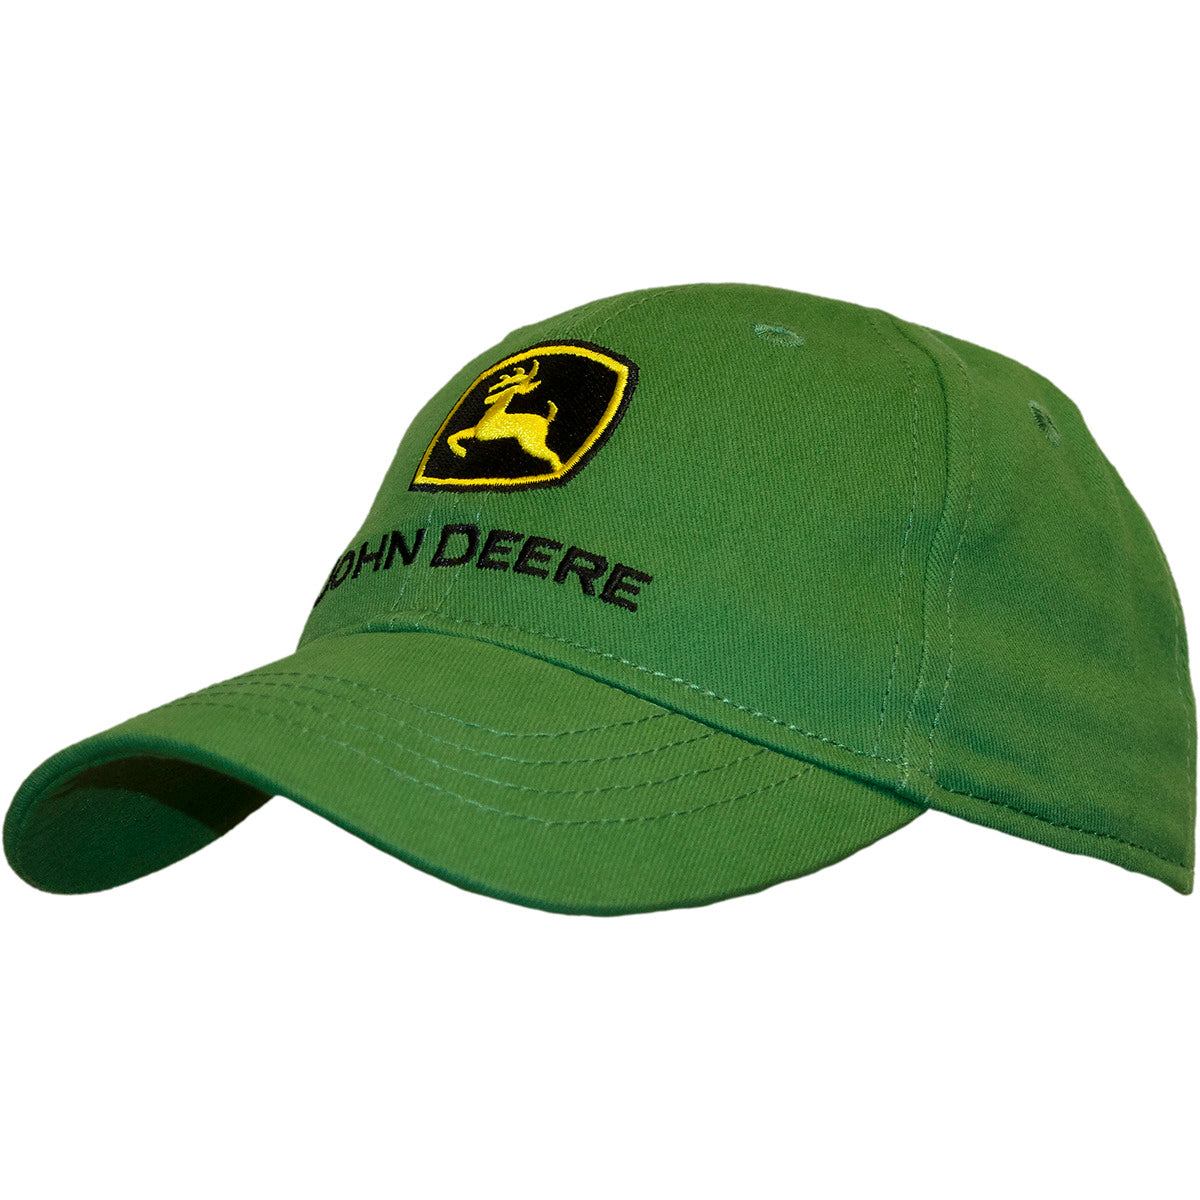 John Deere Toddler (2T-4T) Green Baseball Hat/Cap - LP51345